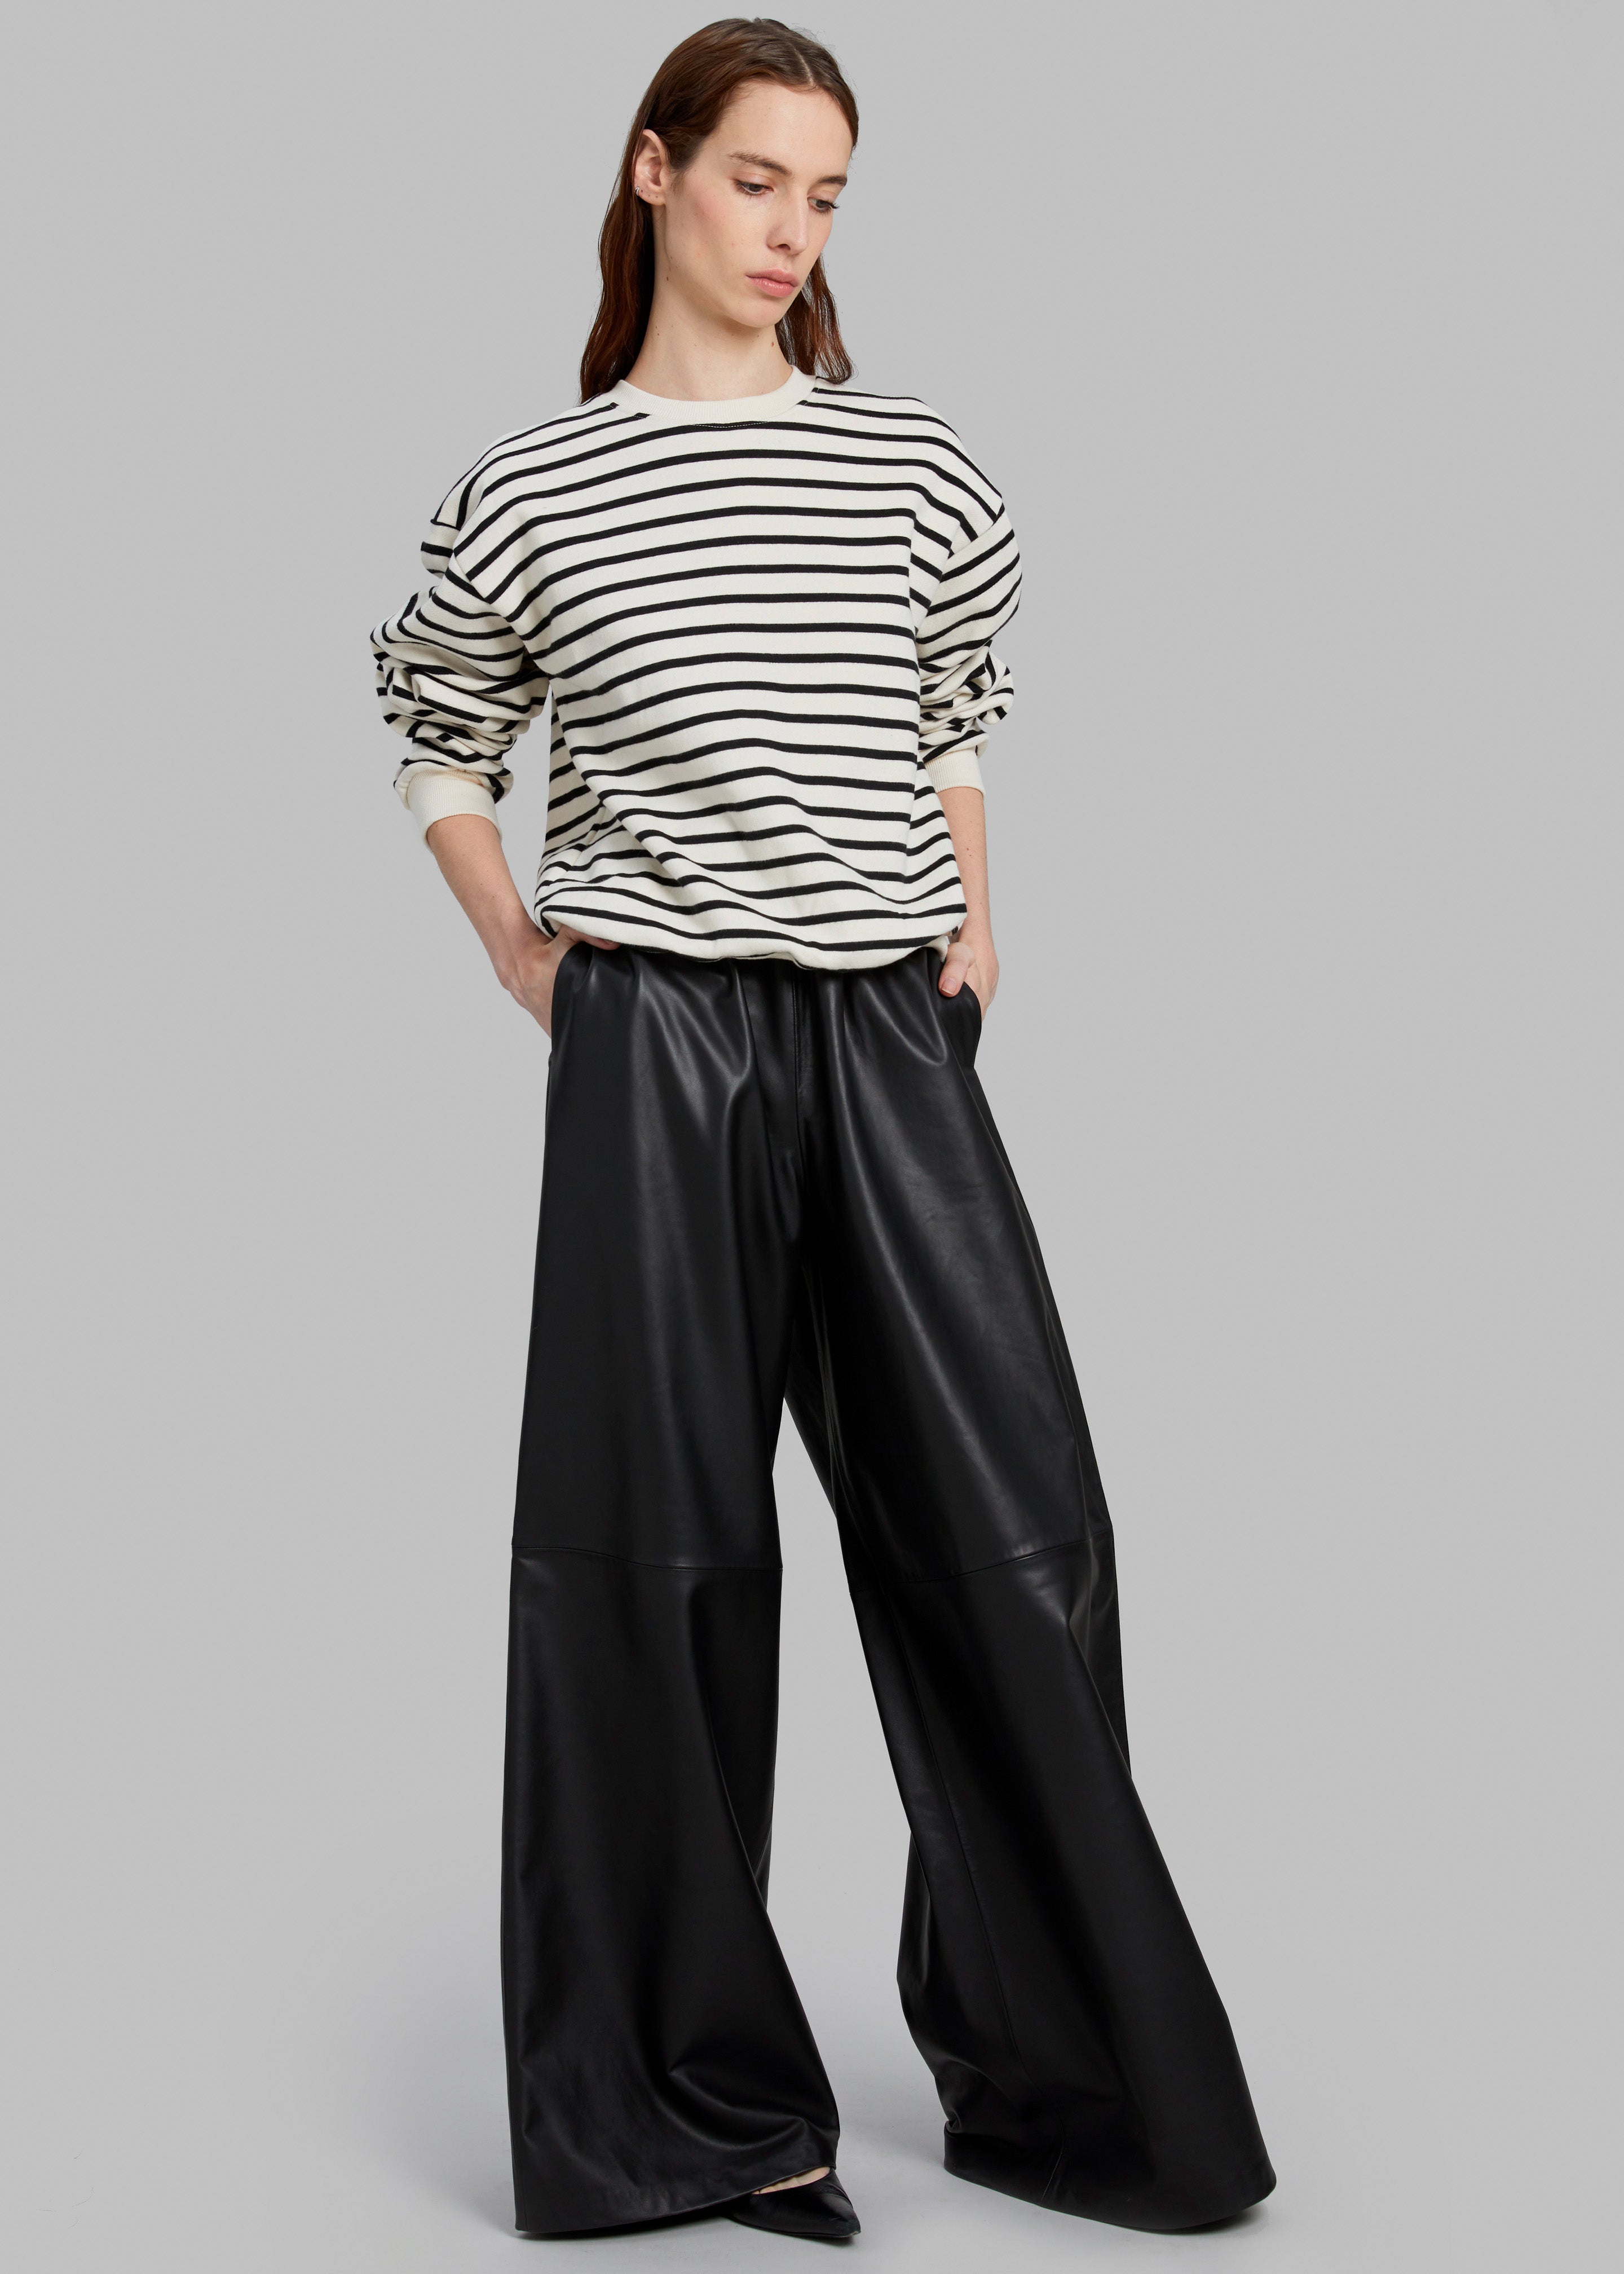 Saint Stripe Sweater - Black/White Stripe - 3